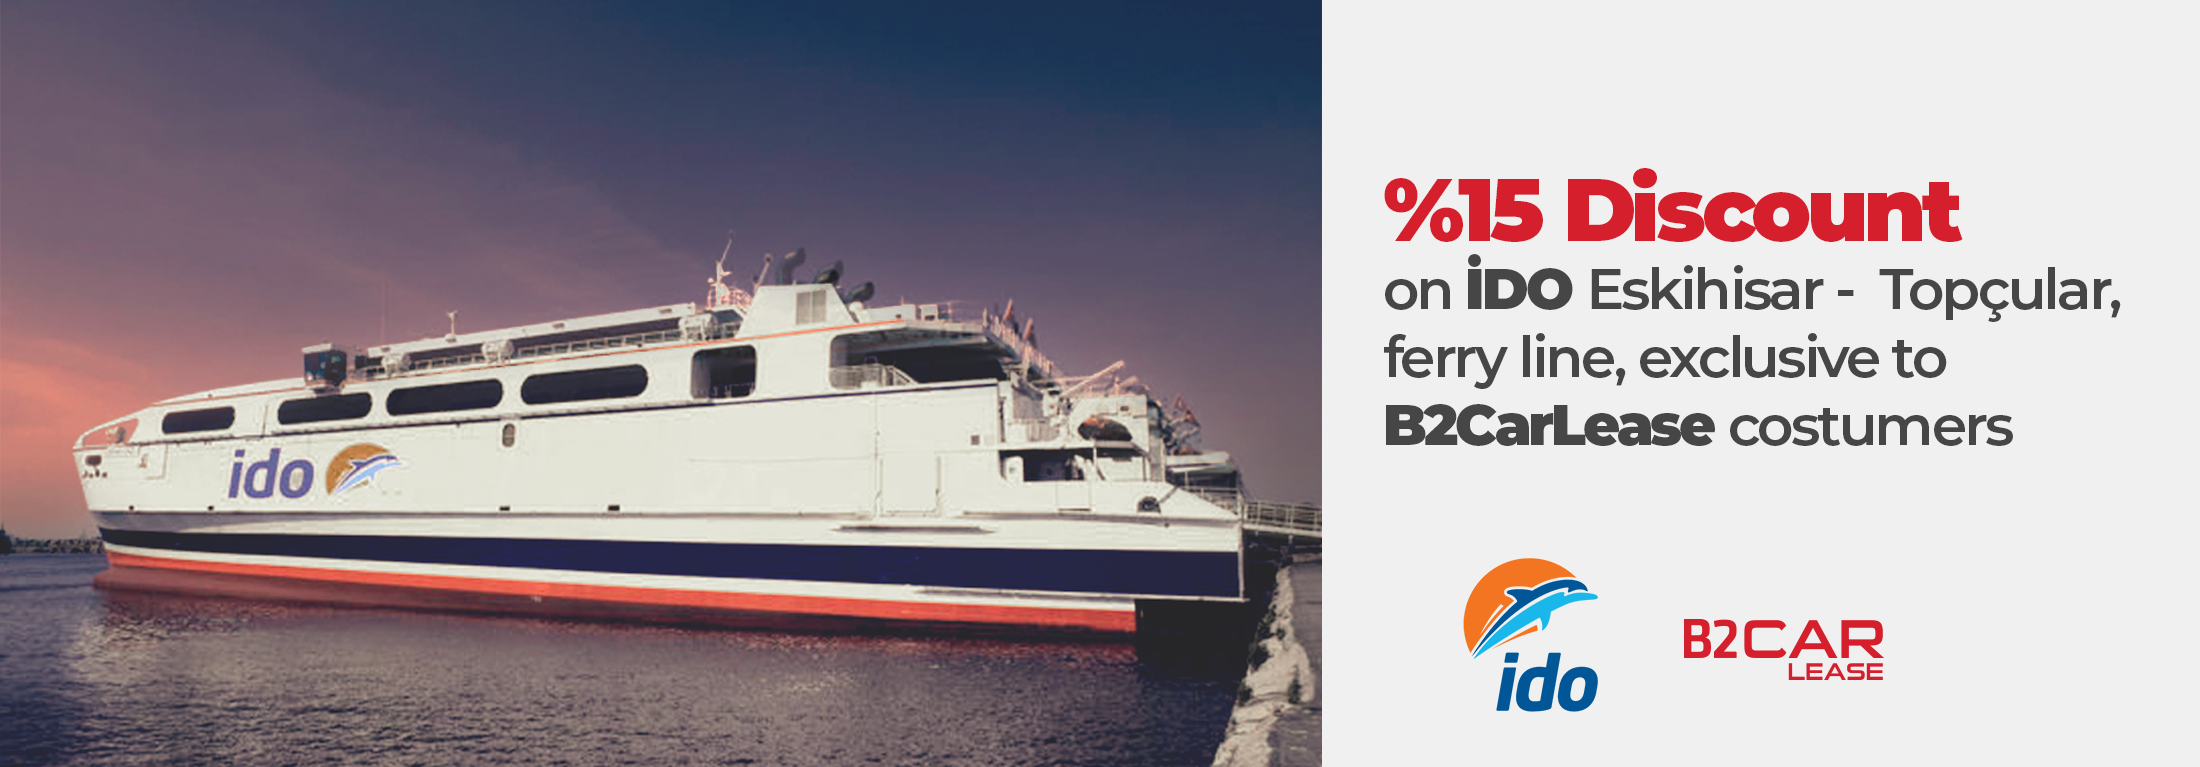 %15 discount on İDO Eskihisar - Topçular ferry line, exclusive to B2CarLease costumers | Turkey Car Rental